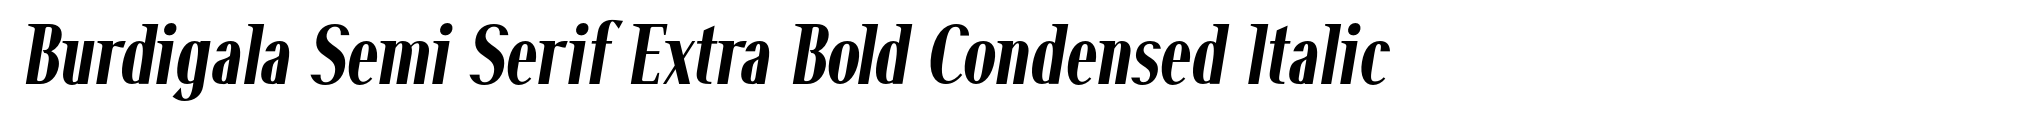 Burdigala Semi Serif Extra Bold Condensed Italic image